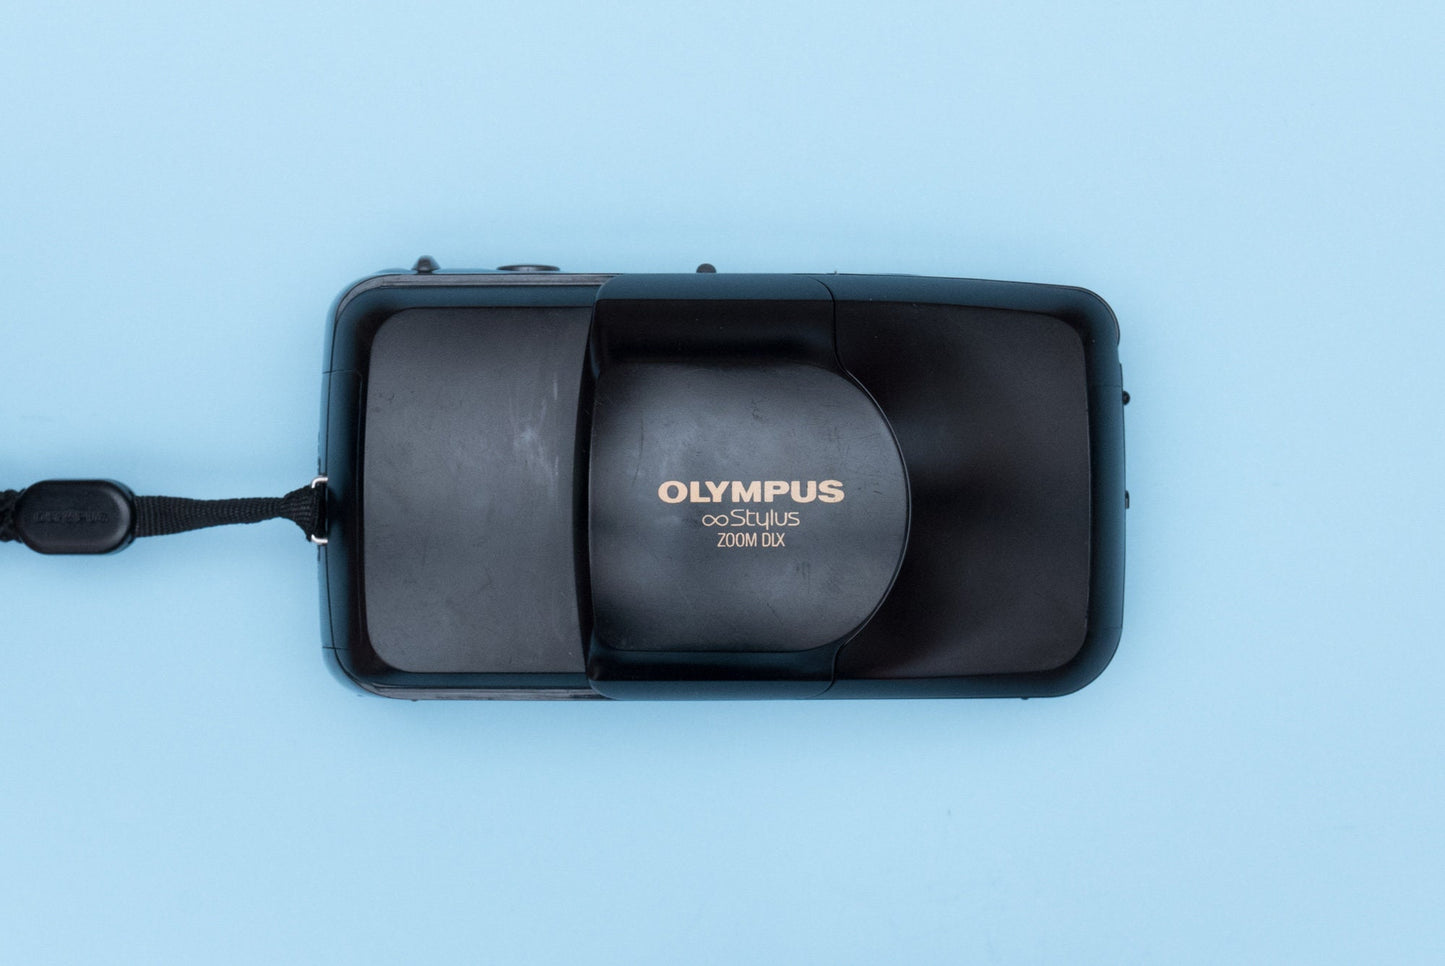 Olympus µ[mju:] Mju Infinity Stylus Zoom DLX Compact 35mm Film Camera